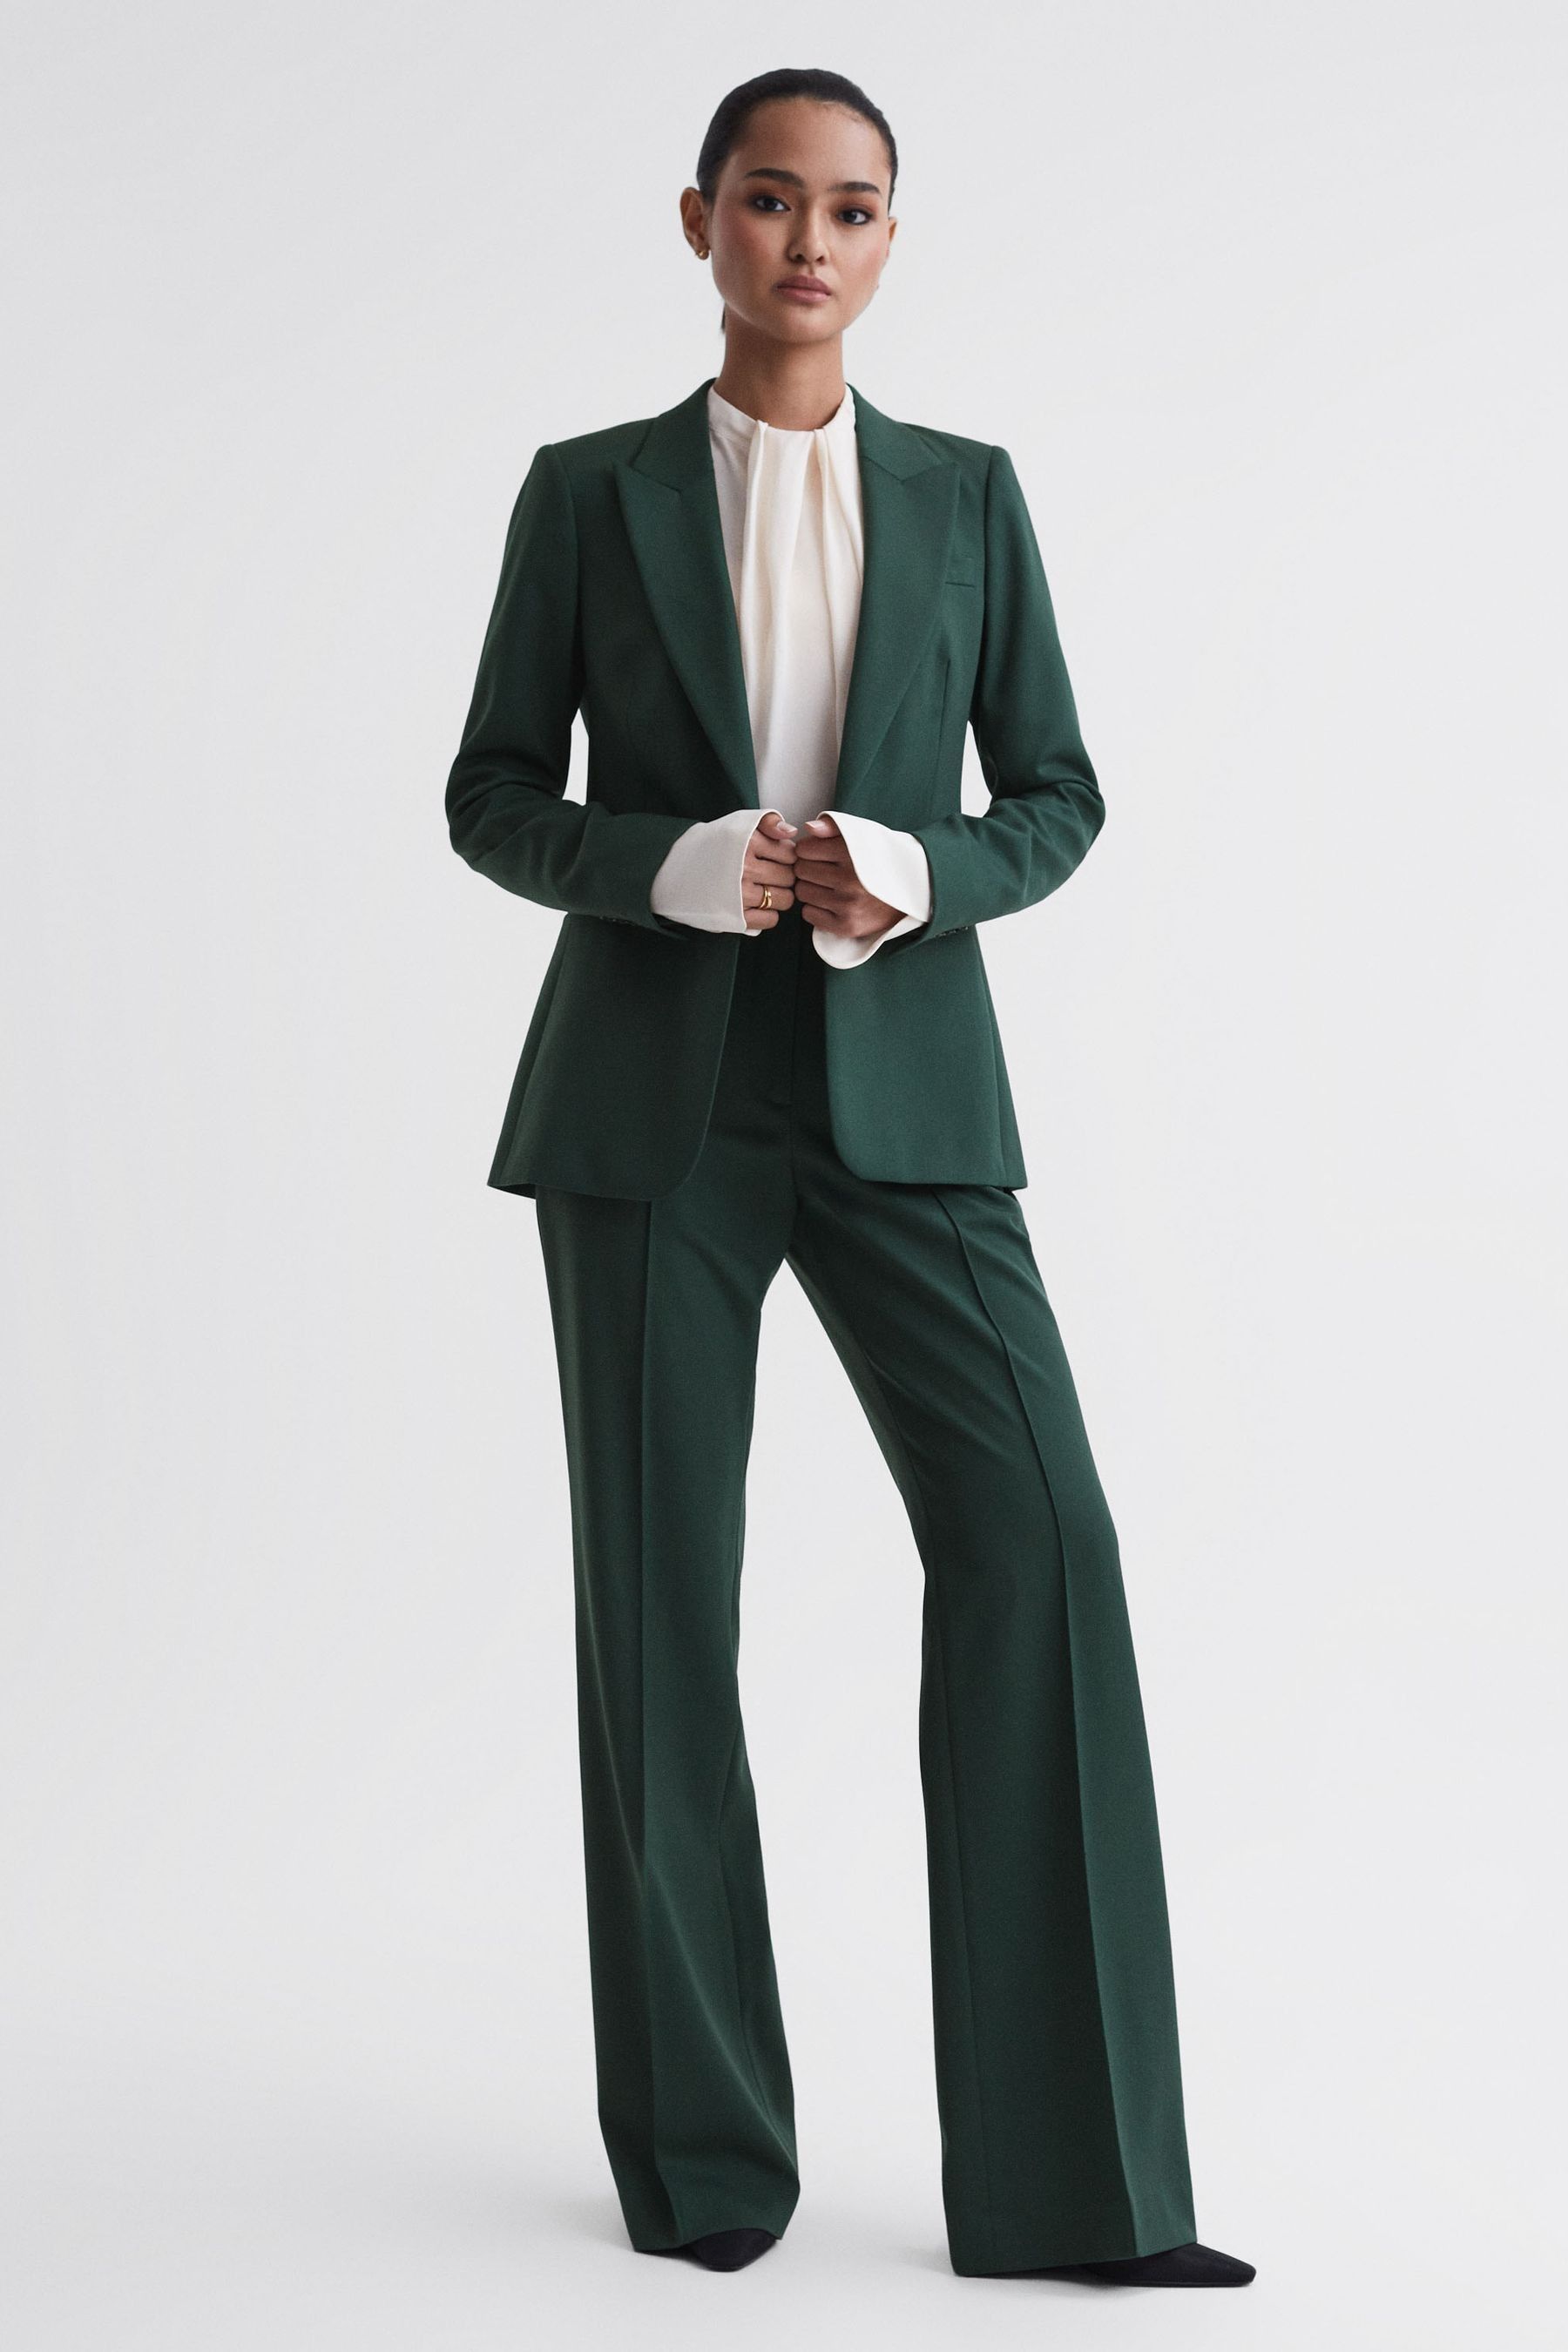 Reiss Jade - Bottle Green Petite Tailored Fit Single Breasted Suit Blazer, Us 2